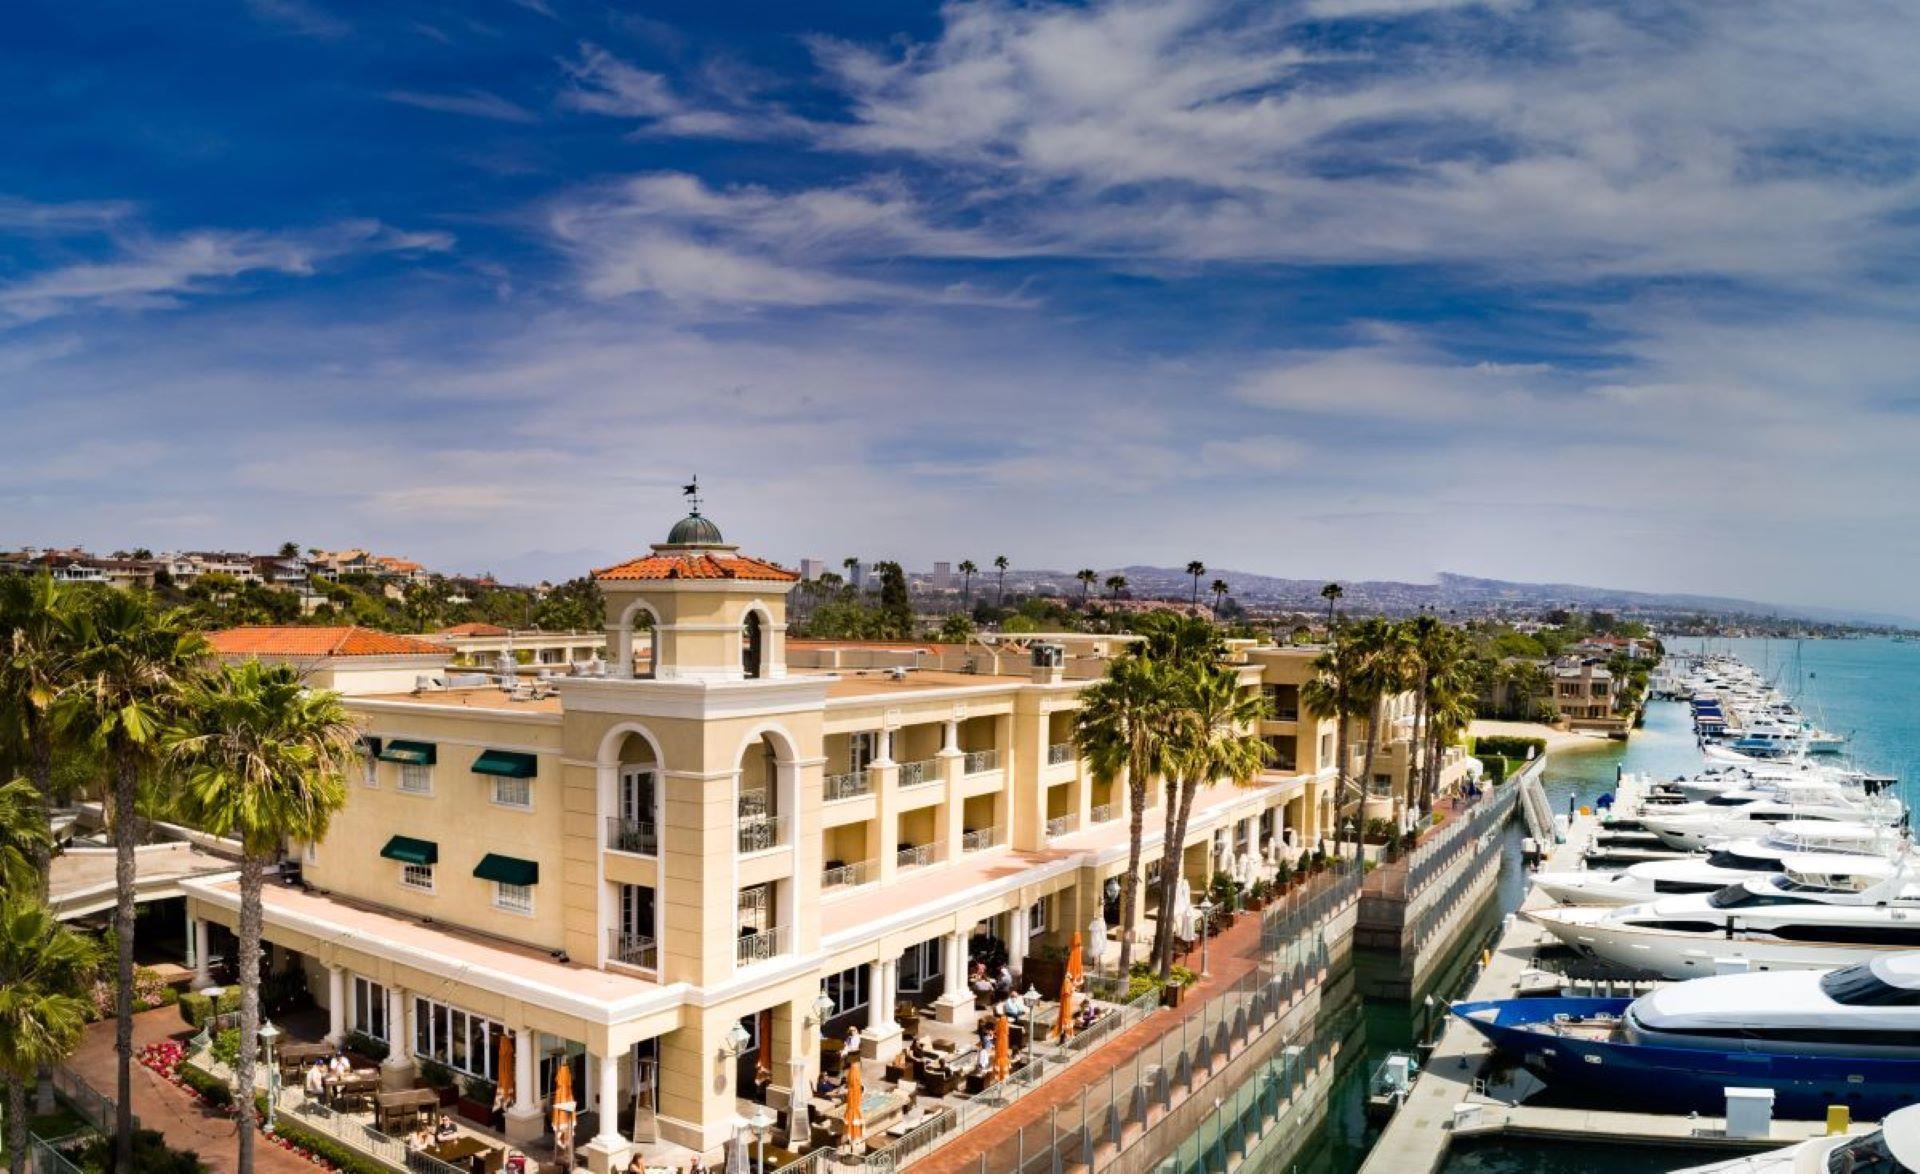 Balboa Bay Resort in Newport Beach, CA